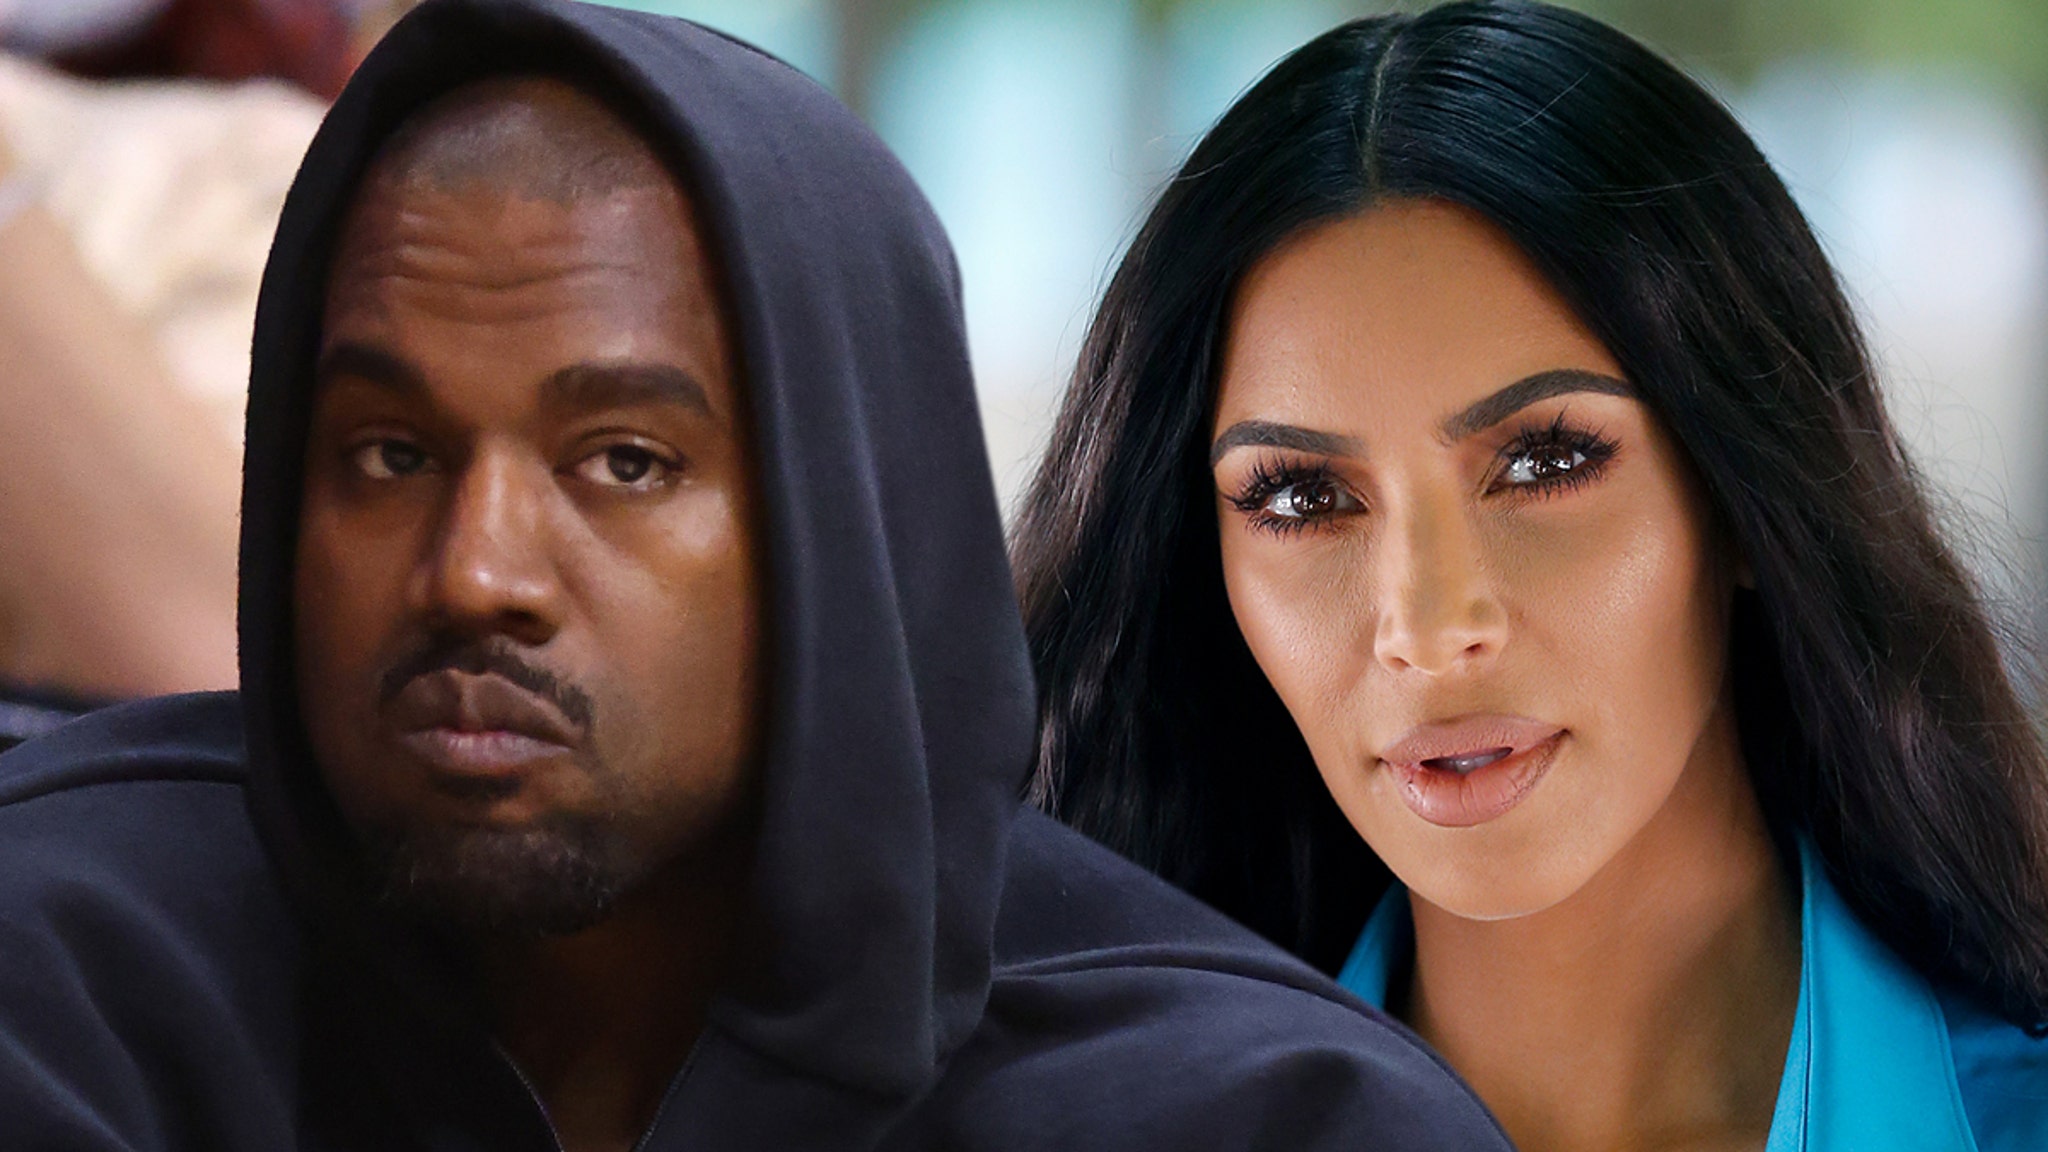 Kim Domingo Xxx - Kanye West Goes After Kim Kardashian and Family, Calls Himself a Sperm Donor